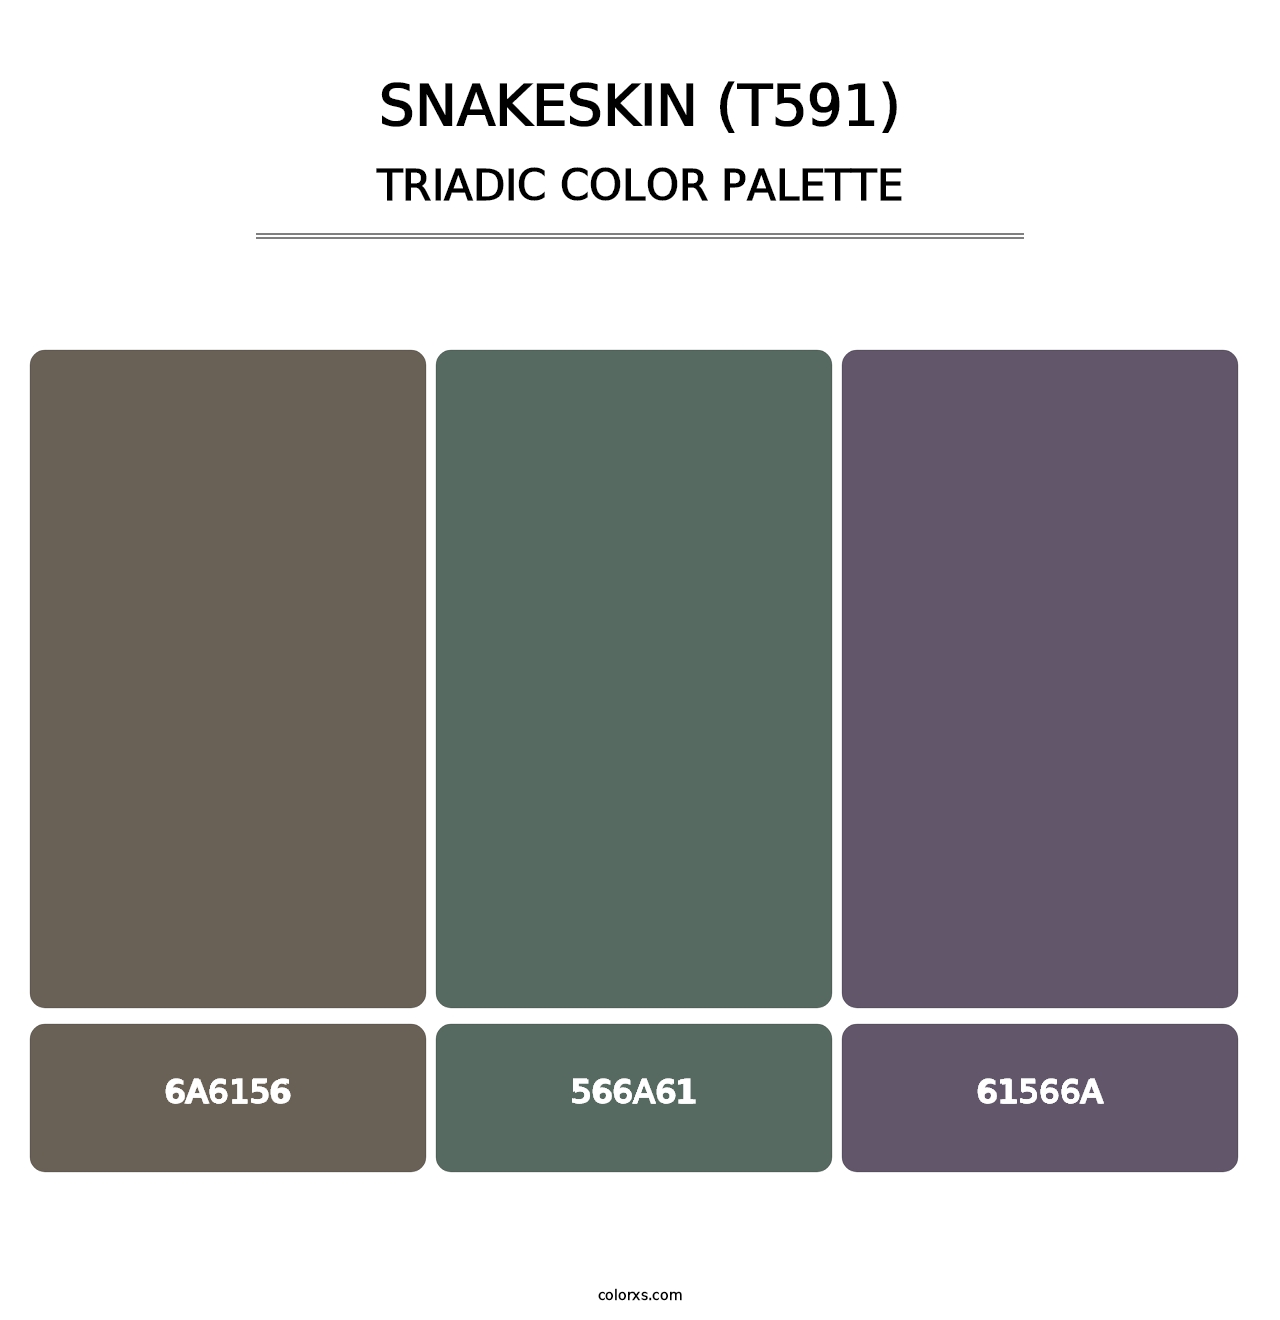 Snakeskin (T591) - Triadic Color Palette